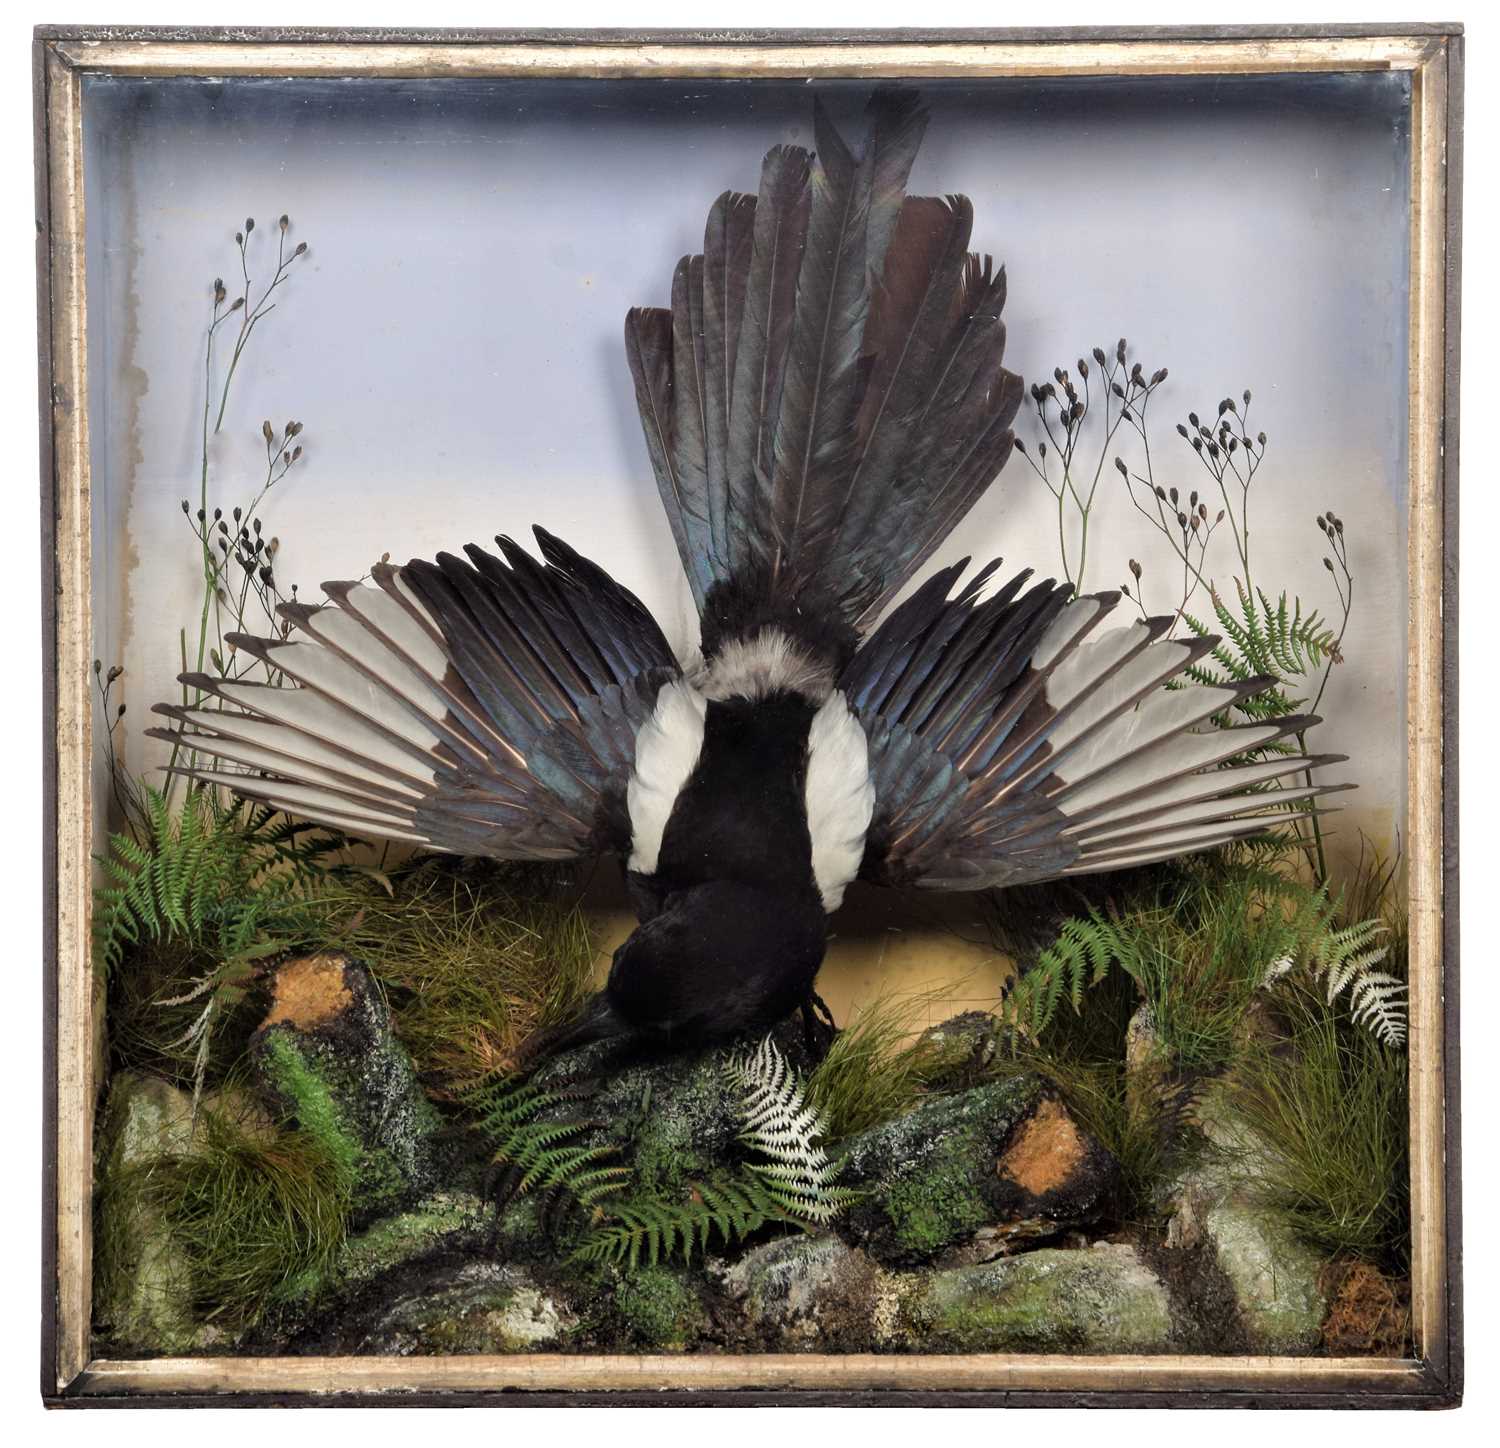 Taxidermy: A Cased European Magpie (Pica pica), circa 1880-1900, attributed to A.S. Hutchinson, 98